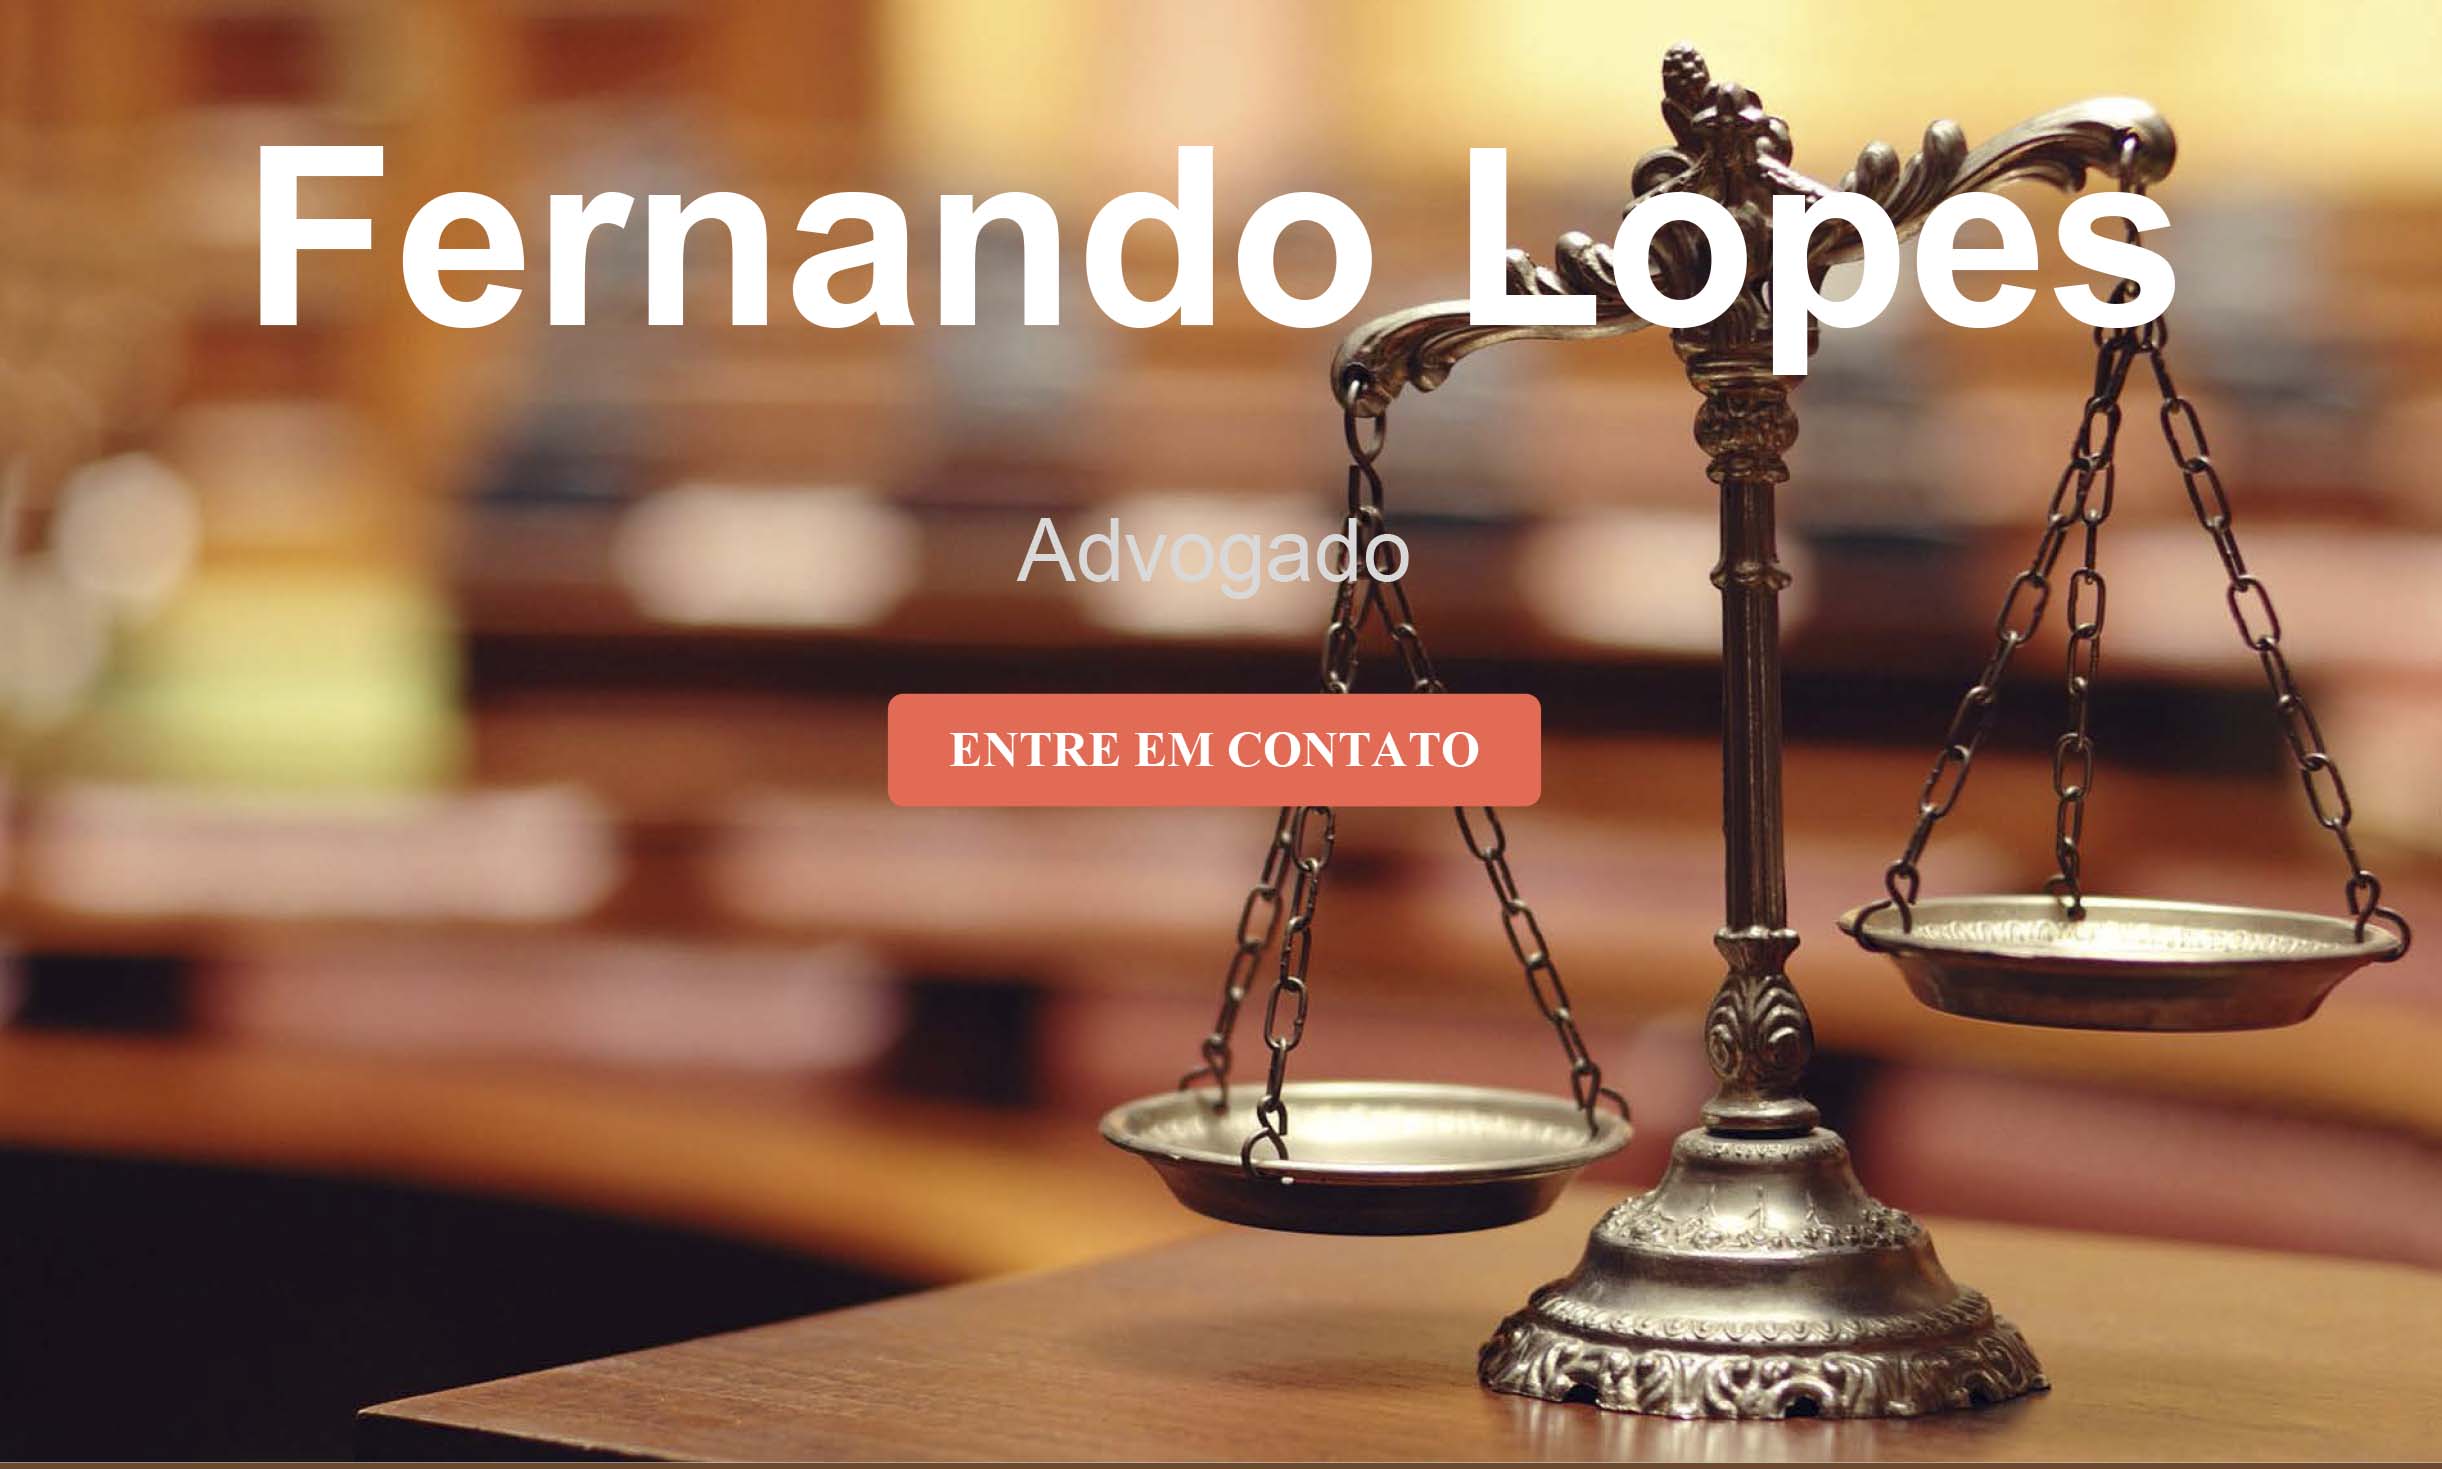 Fernando Lopes Advogado